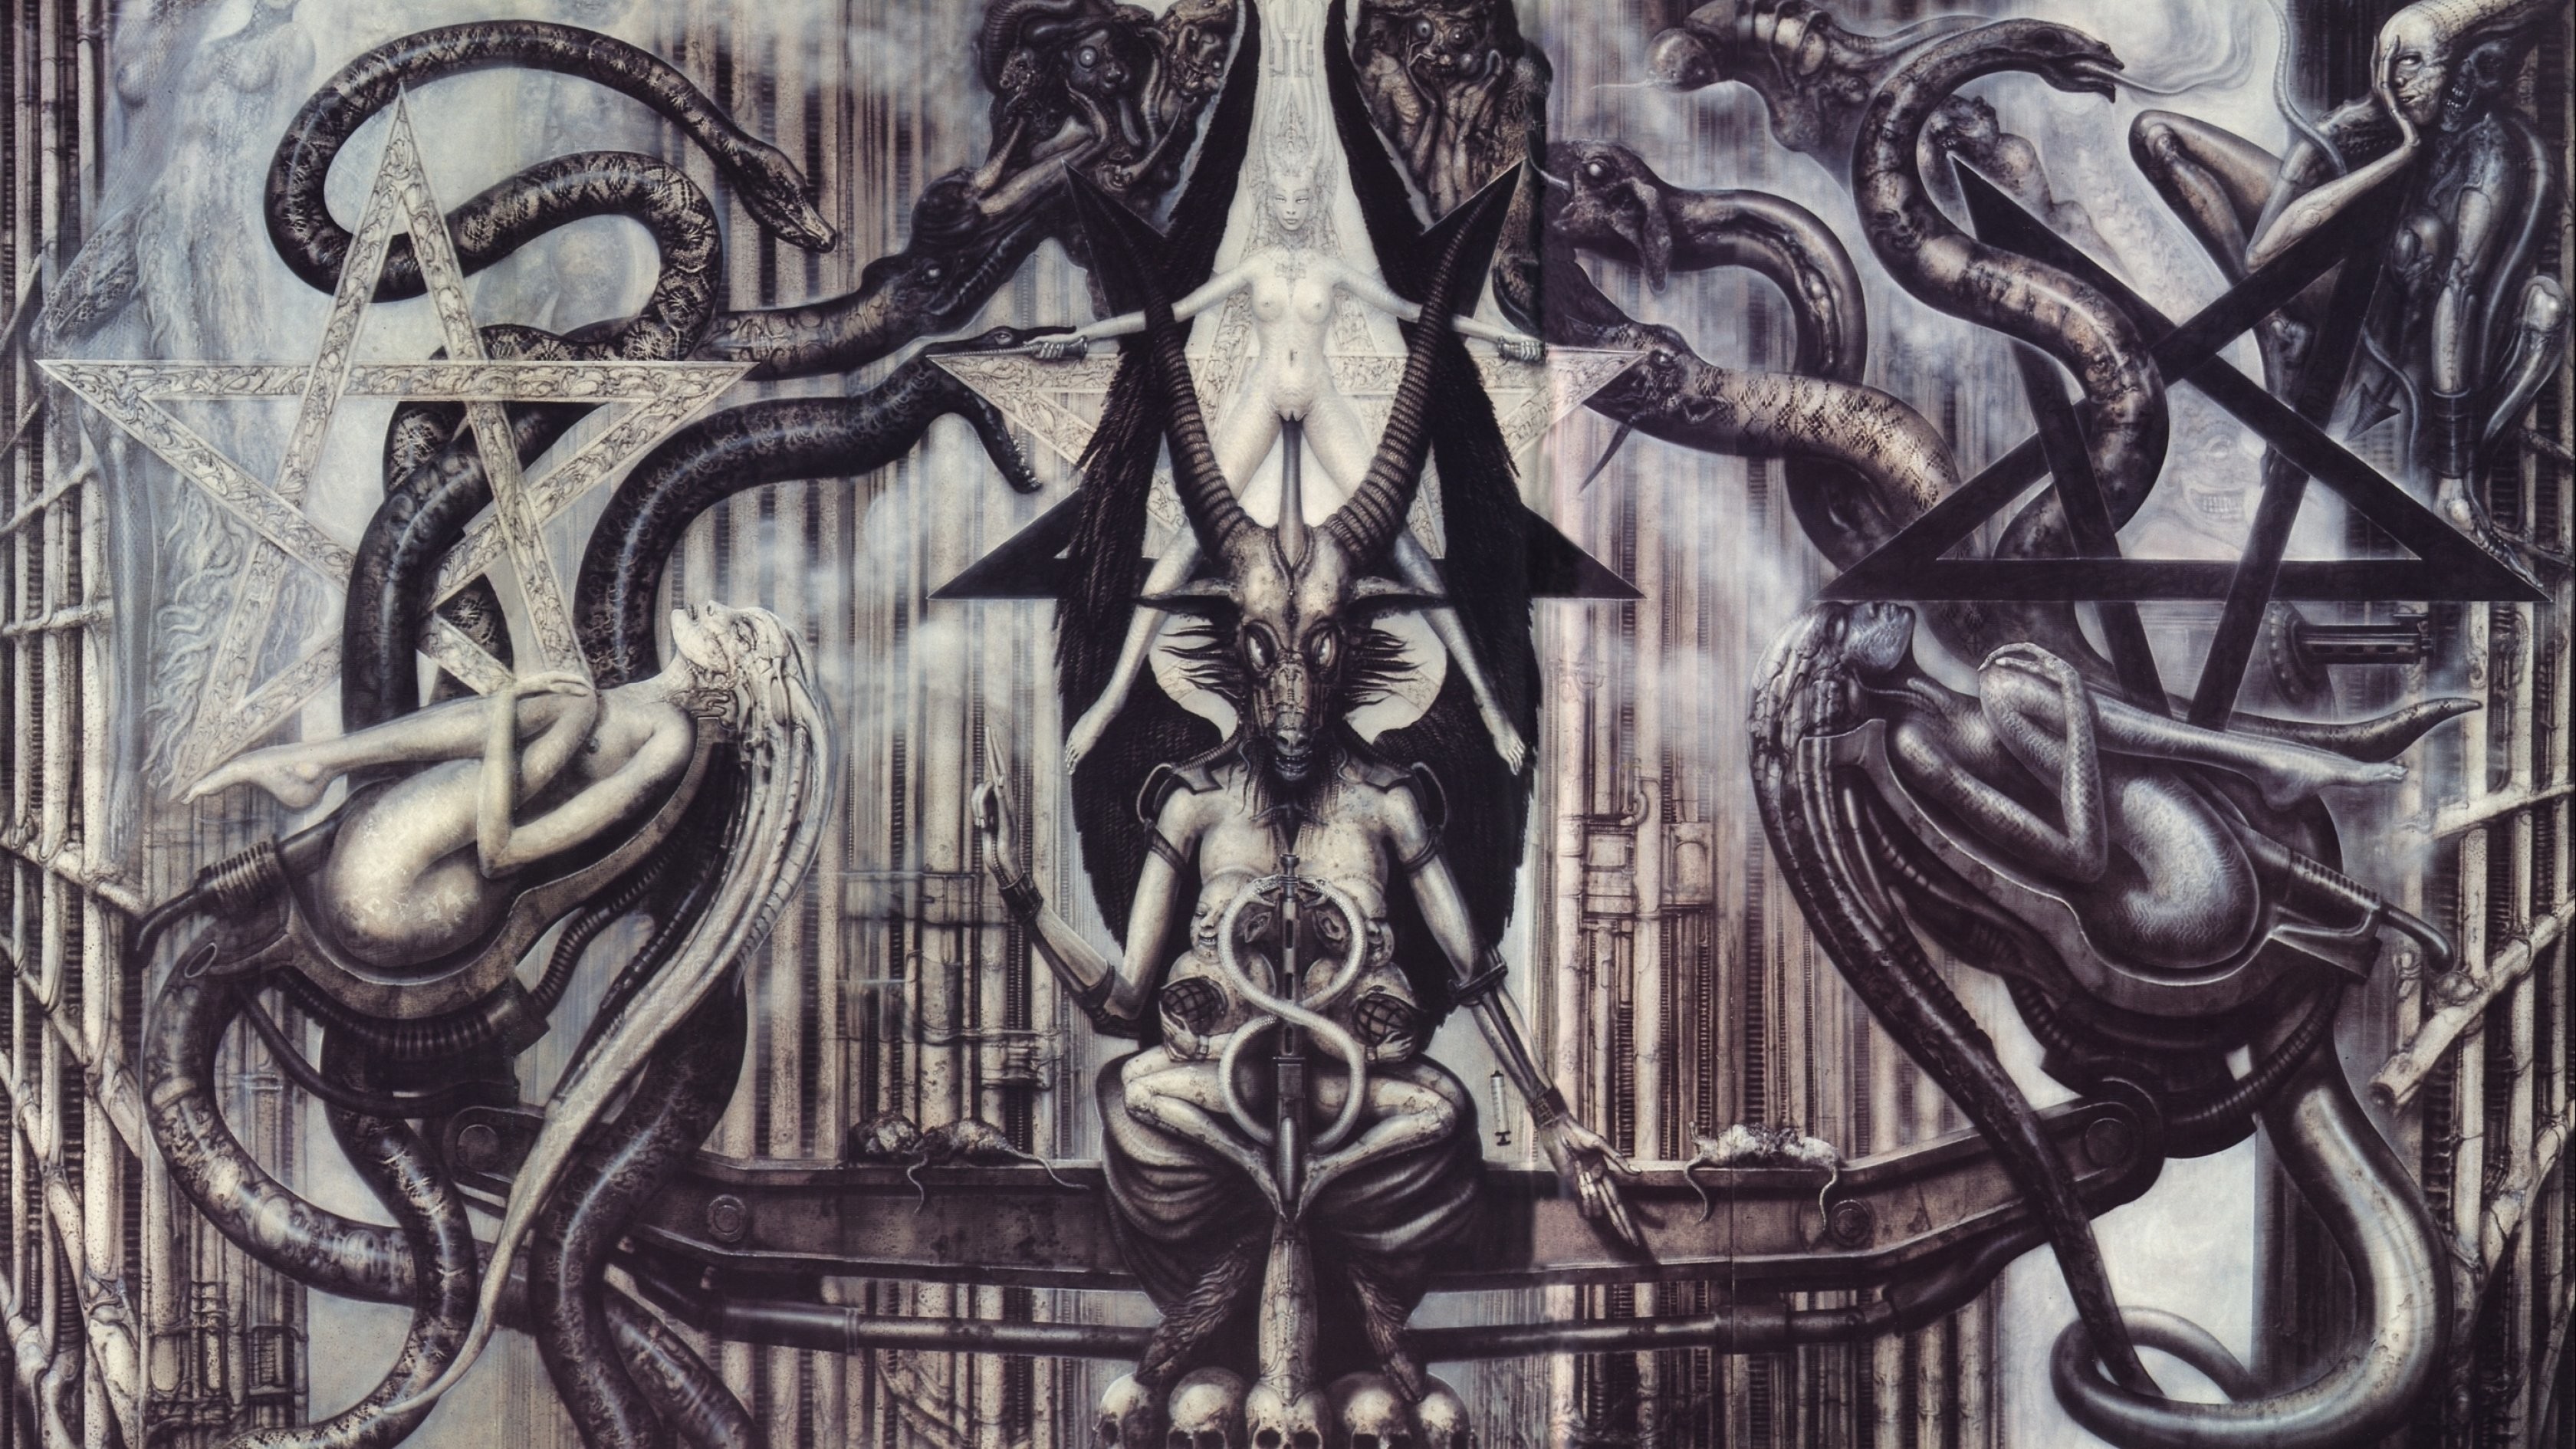 Alien Xenomorph Wallpaper 4k